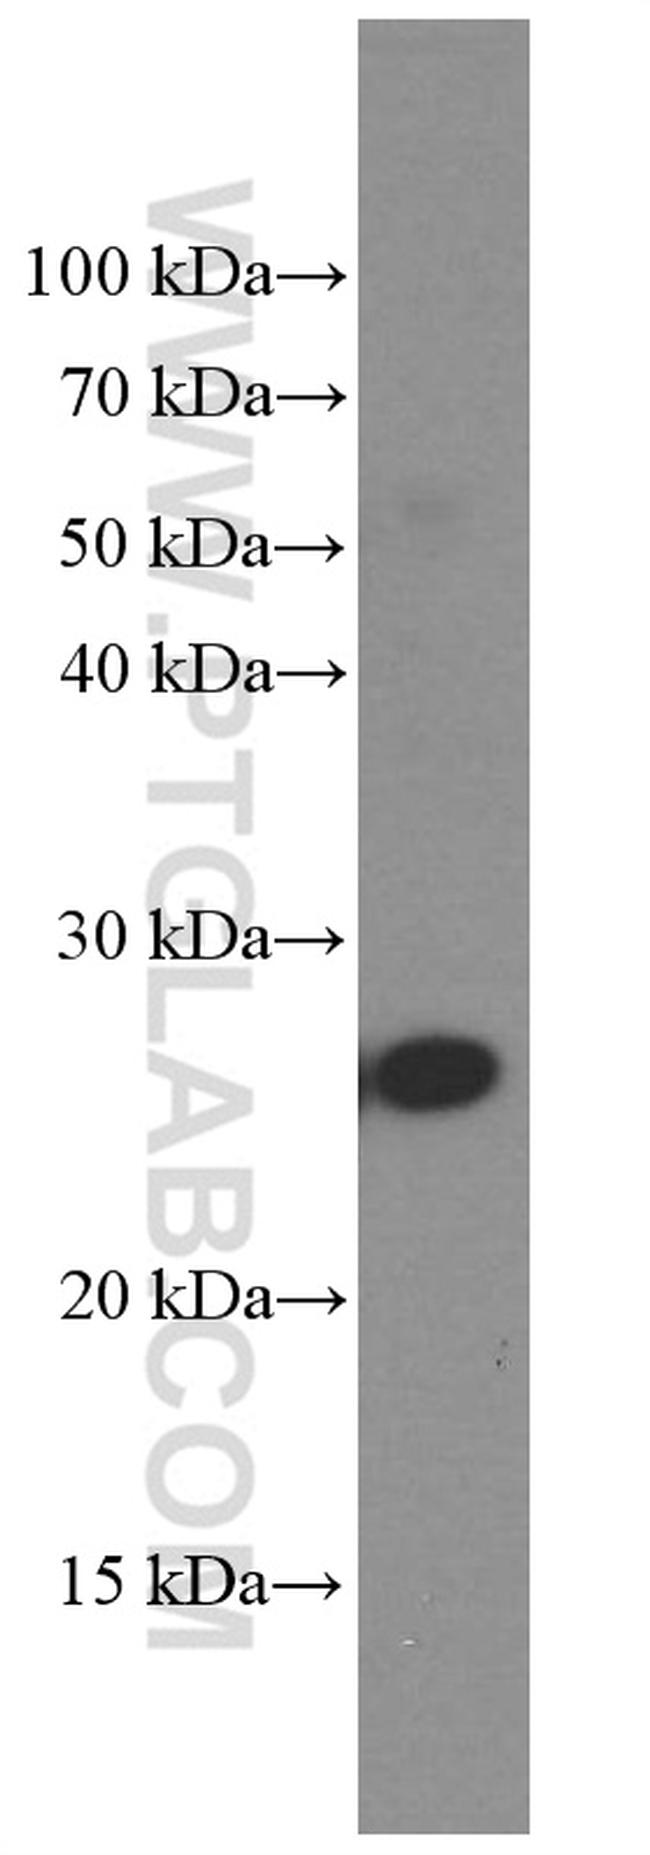 PGRMC1 Antibody in Western Blot (WB)